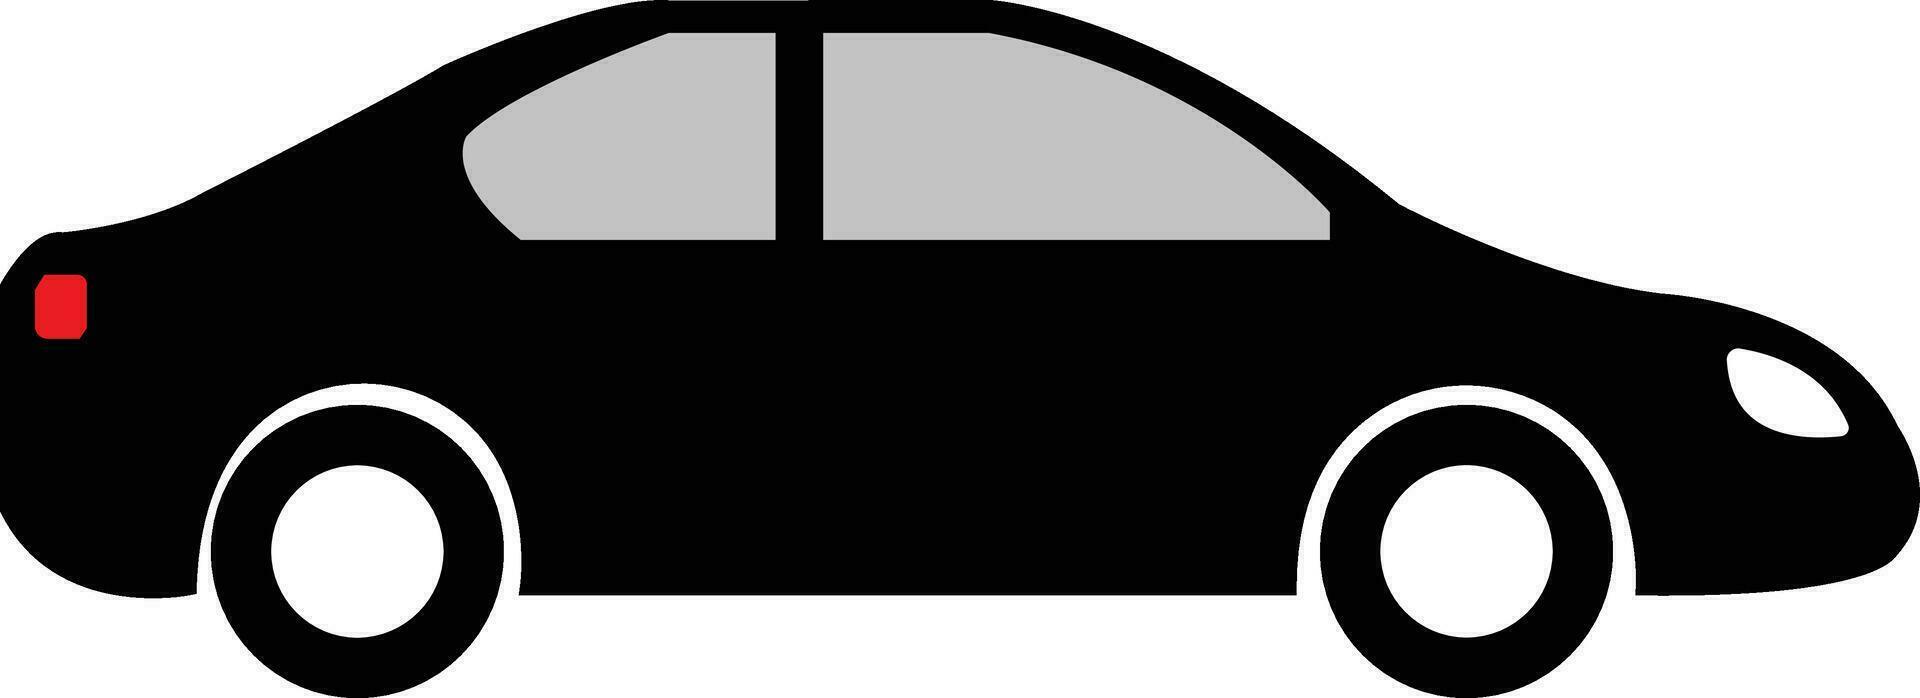 coche silueta automóvil vehículo en negro vector